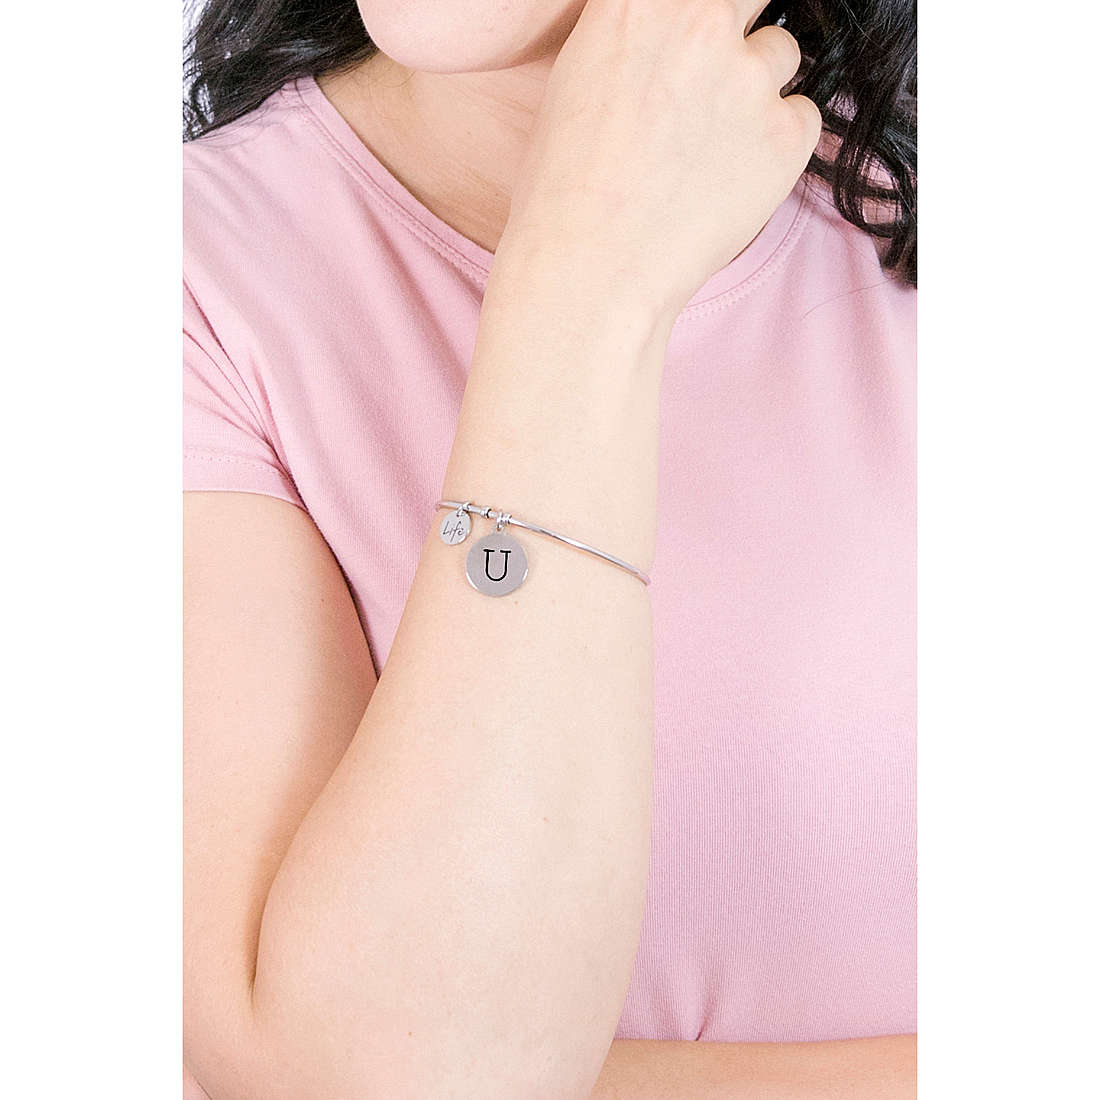 Kidult bracelets Symbols woman 231555u wearing